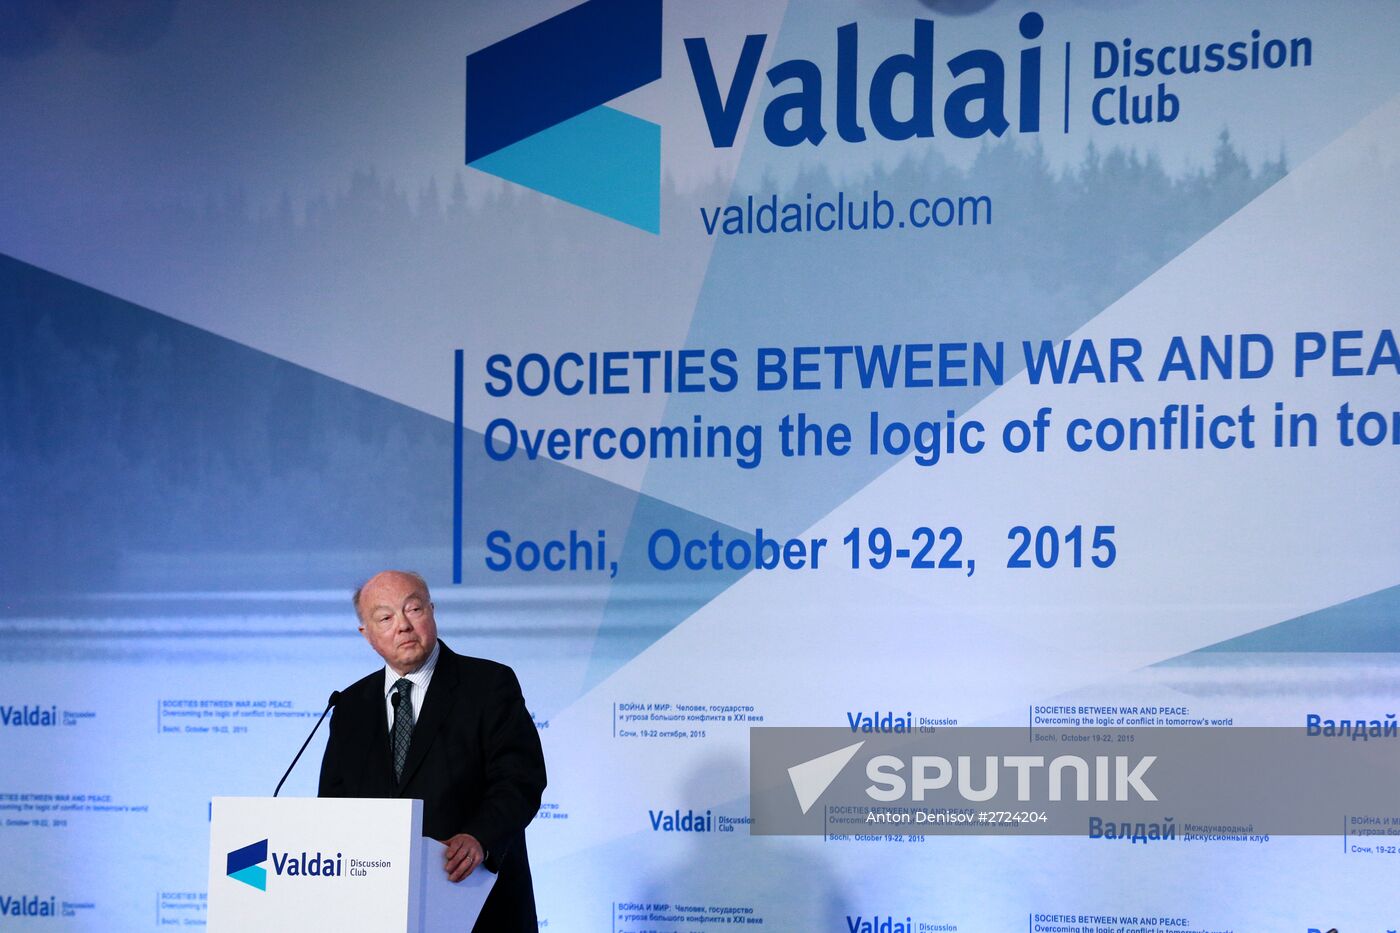 Valdai Discussion Club meeting in Sochi. Day Three